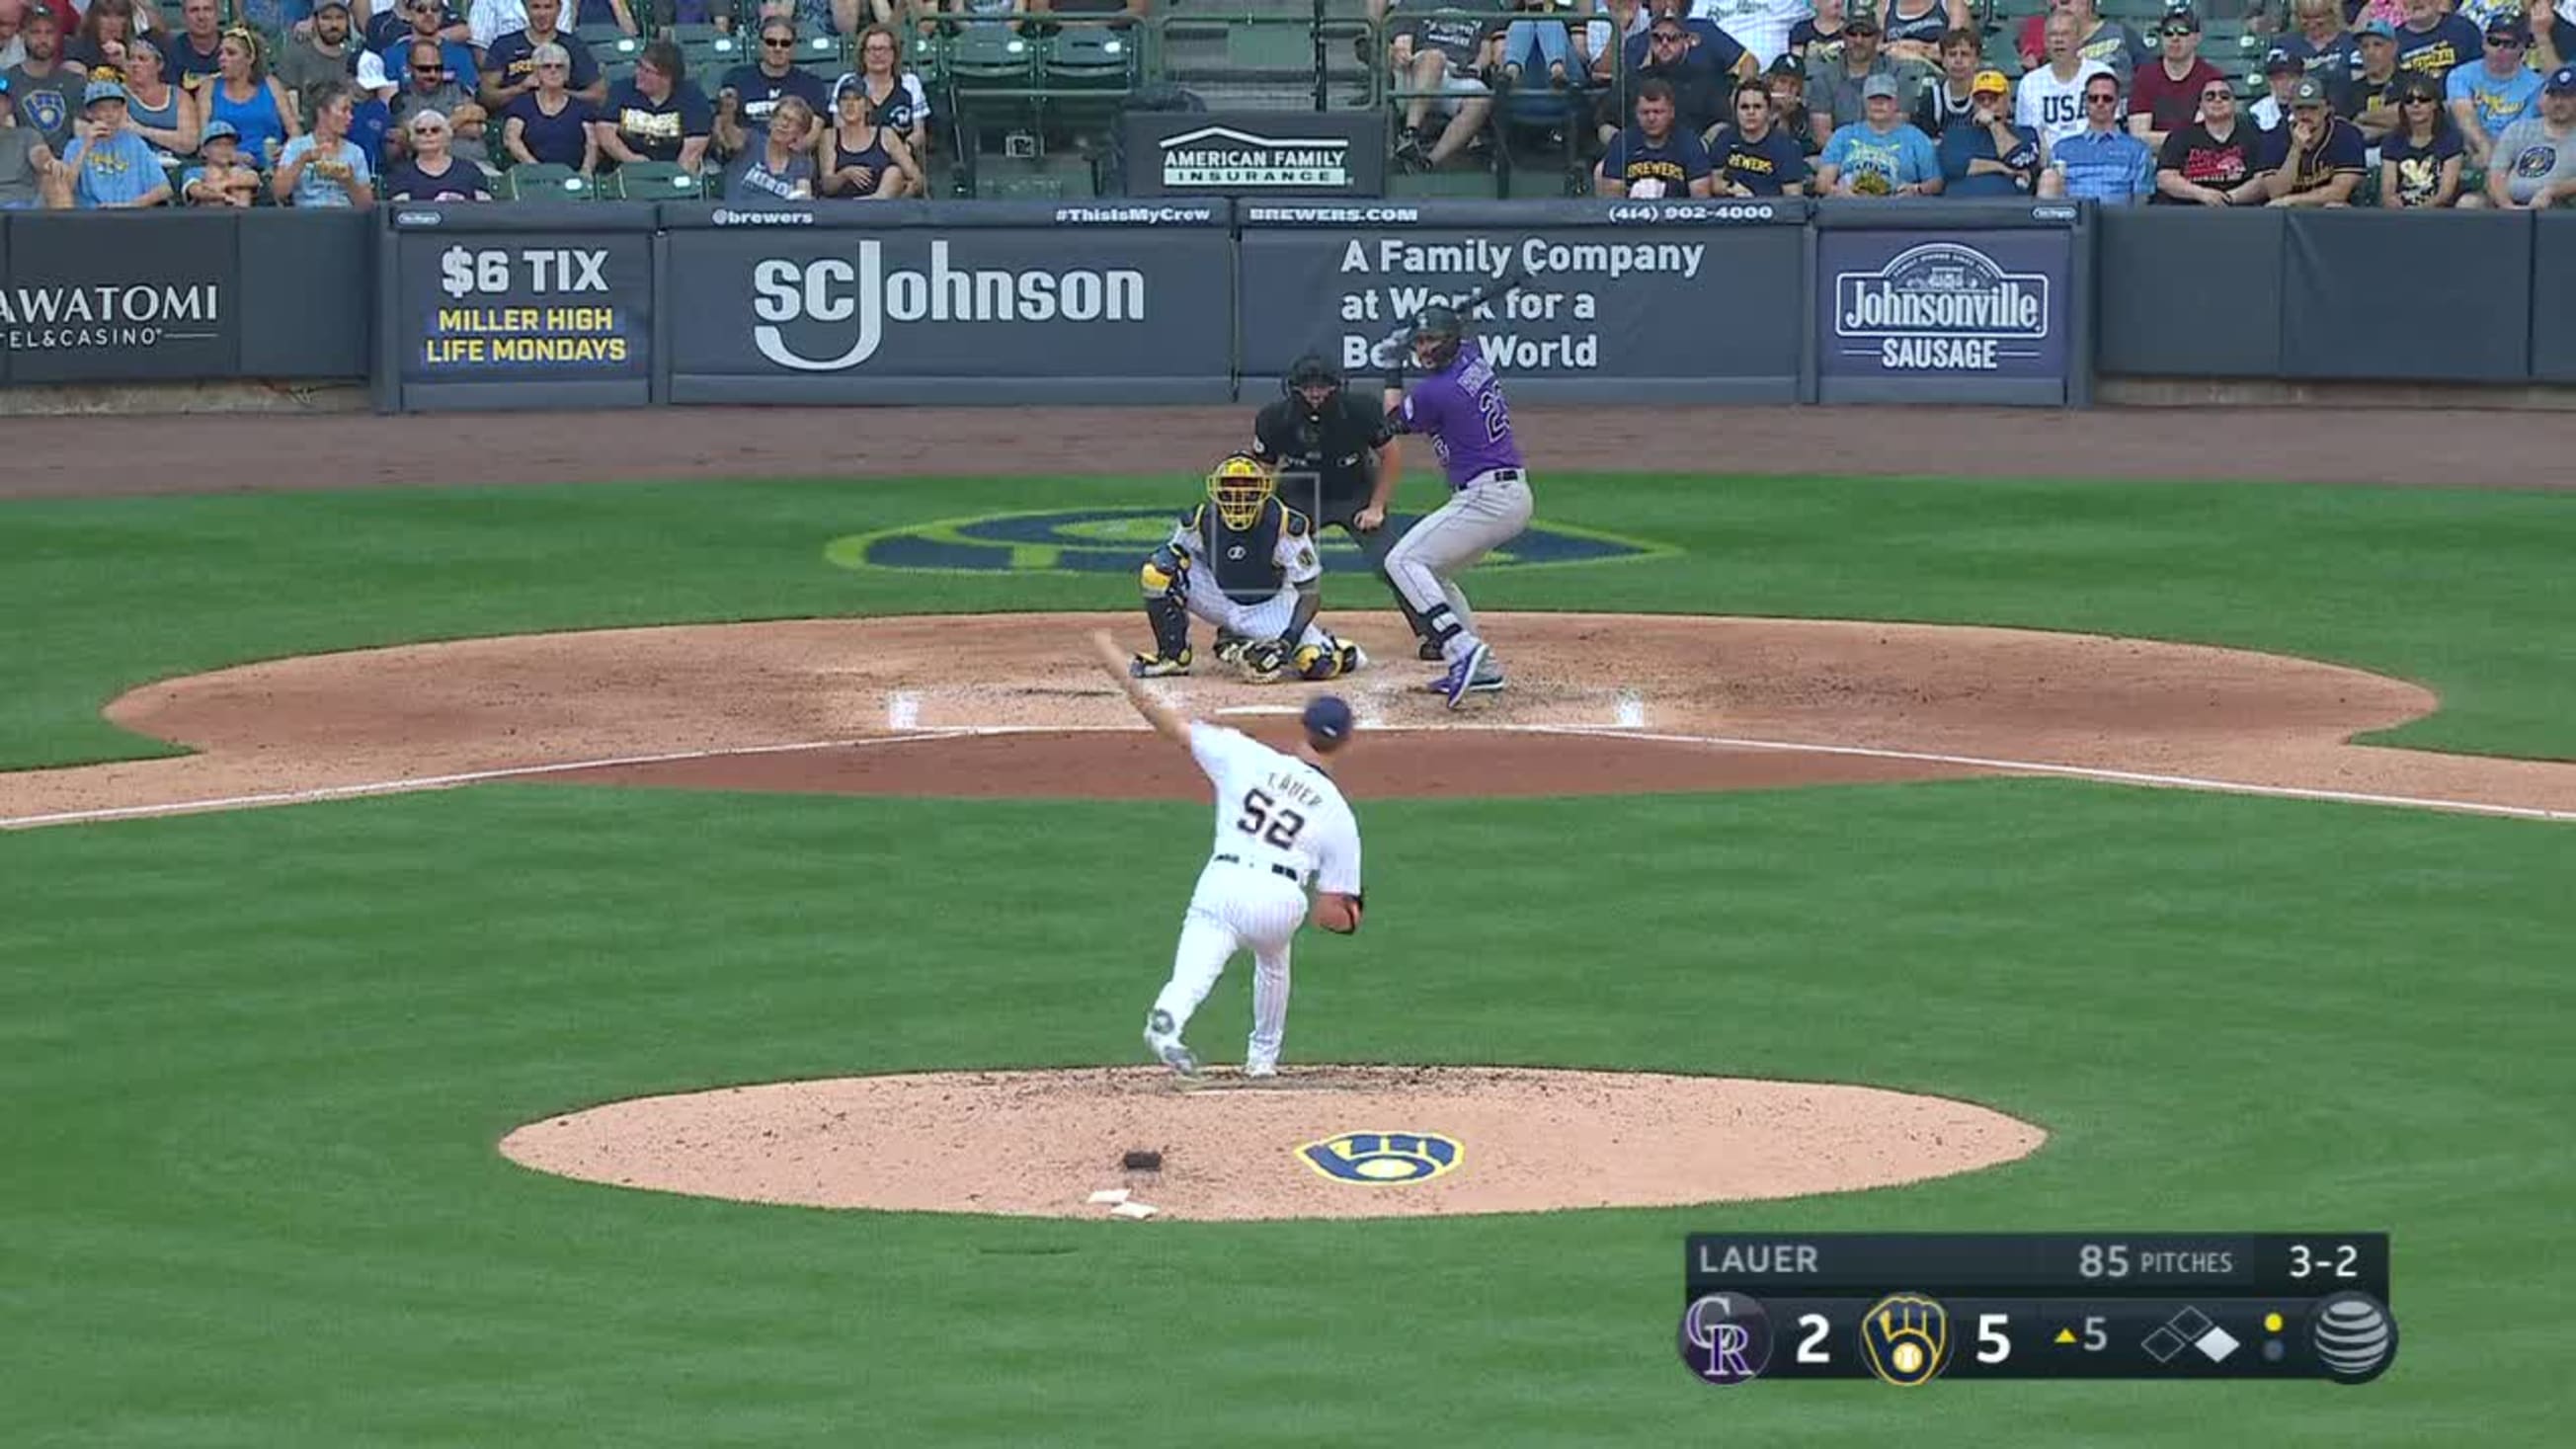 GF Baseball — Kris Bryant on his two home runs